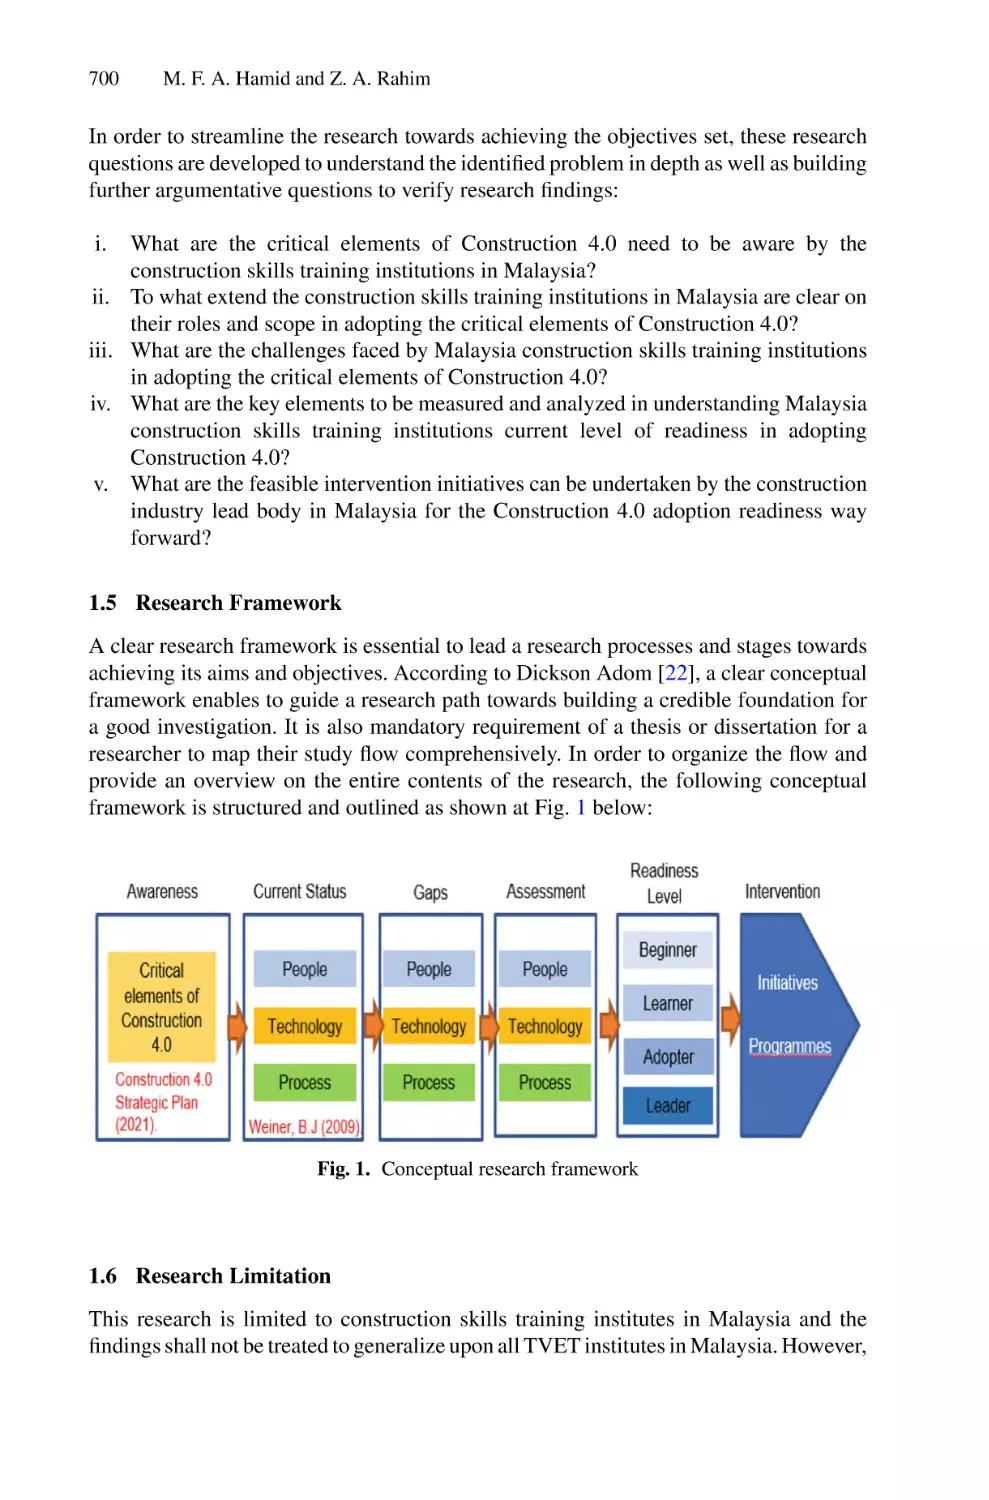 1.5 Research Framework
1.6 Research Limitation